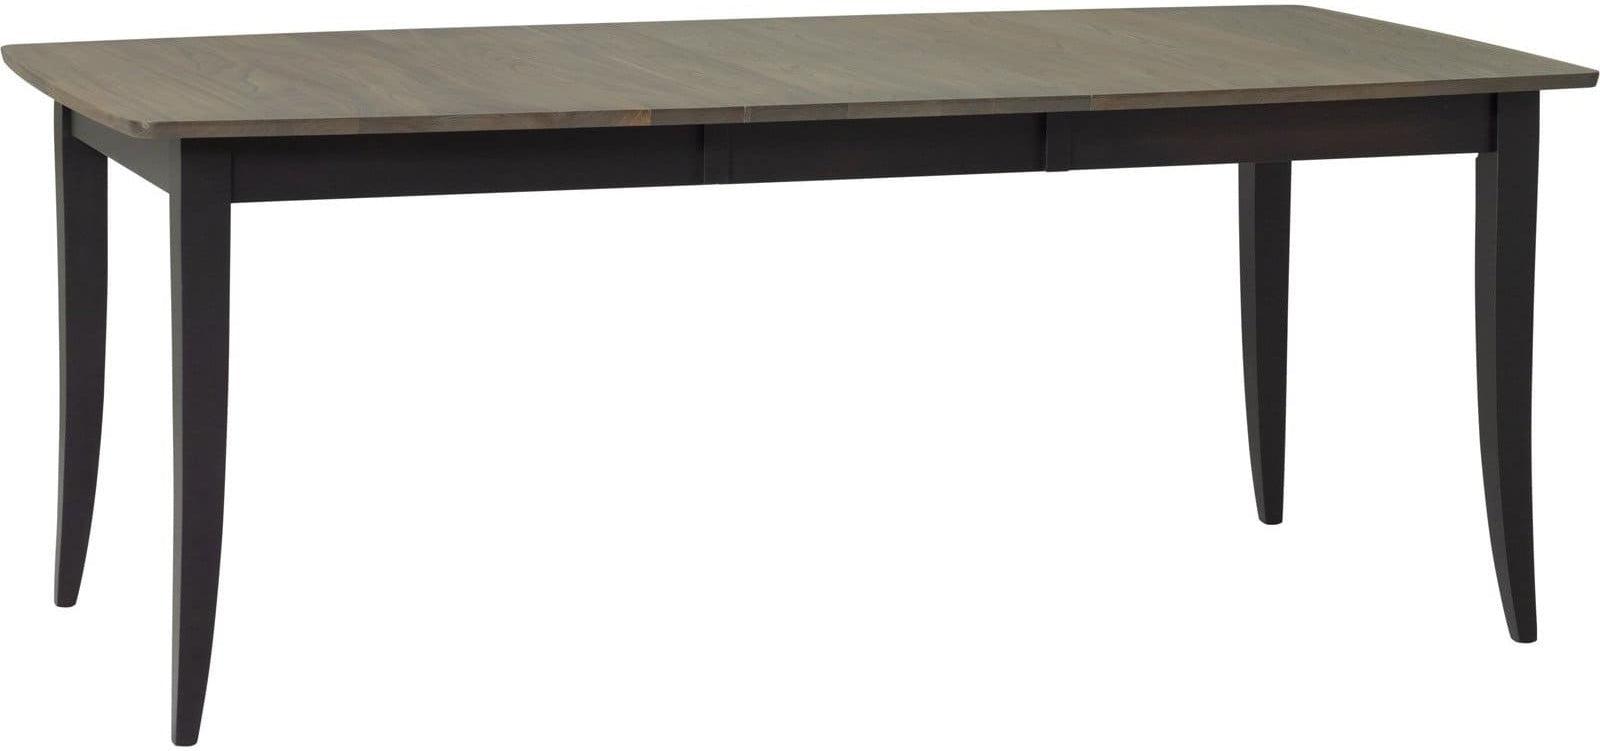 Barkman Furniture Astoria Extension Table - Modern Wood Dining Table-Rustic Furniture Marketplace